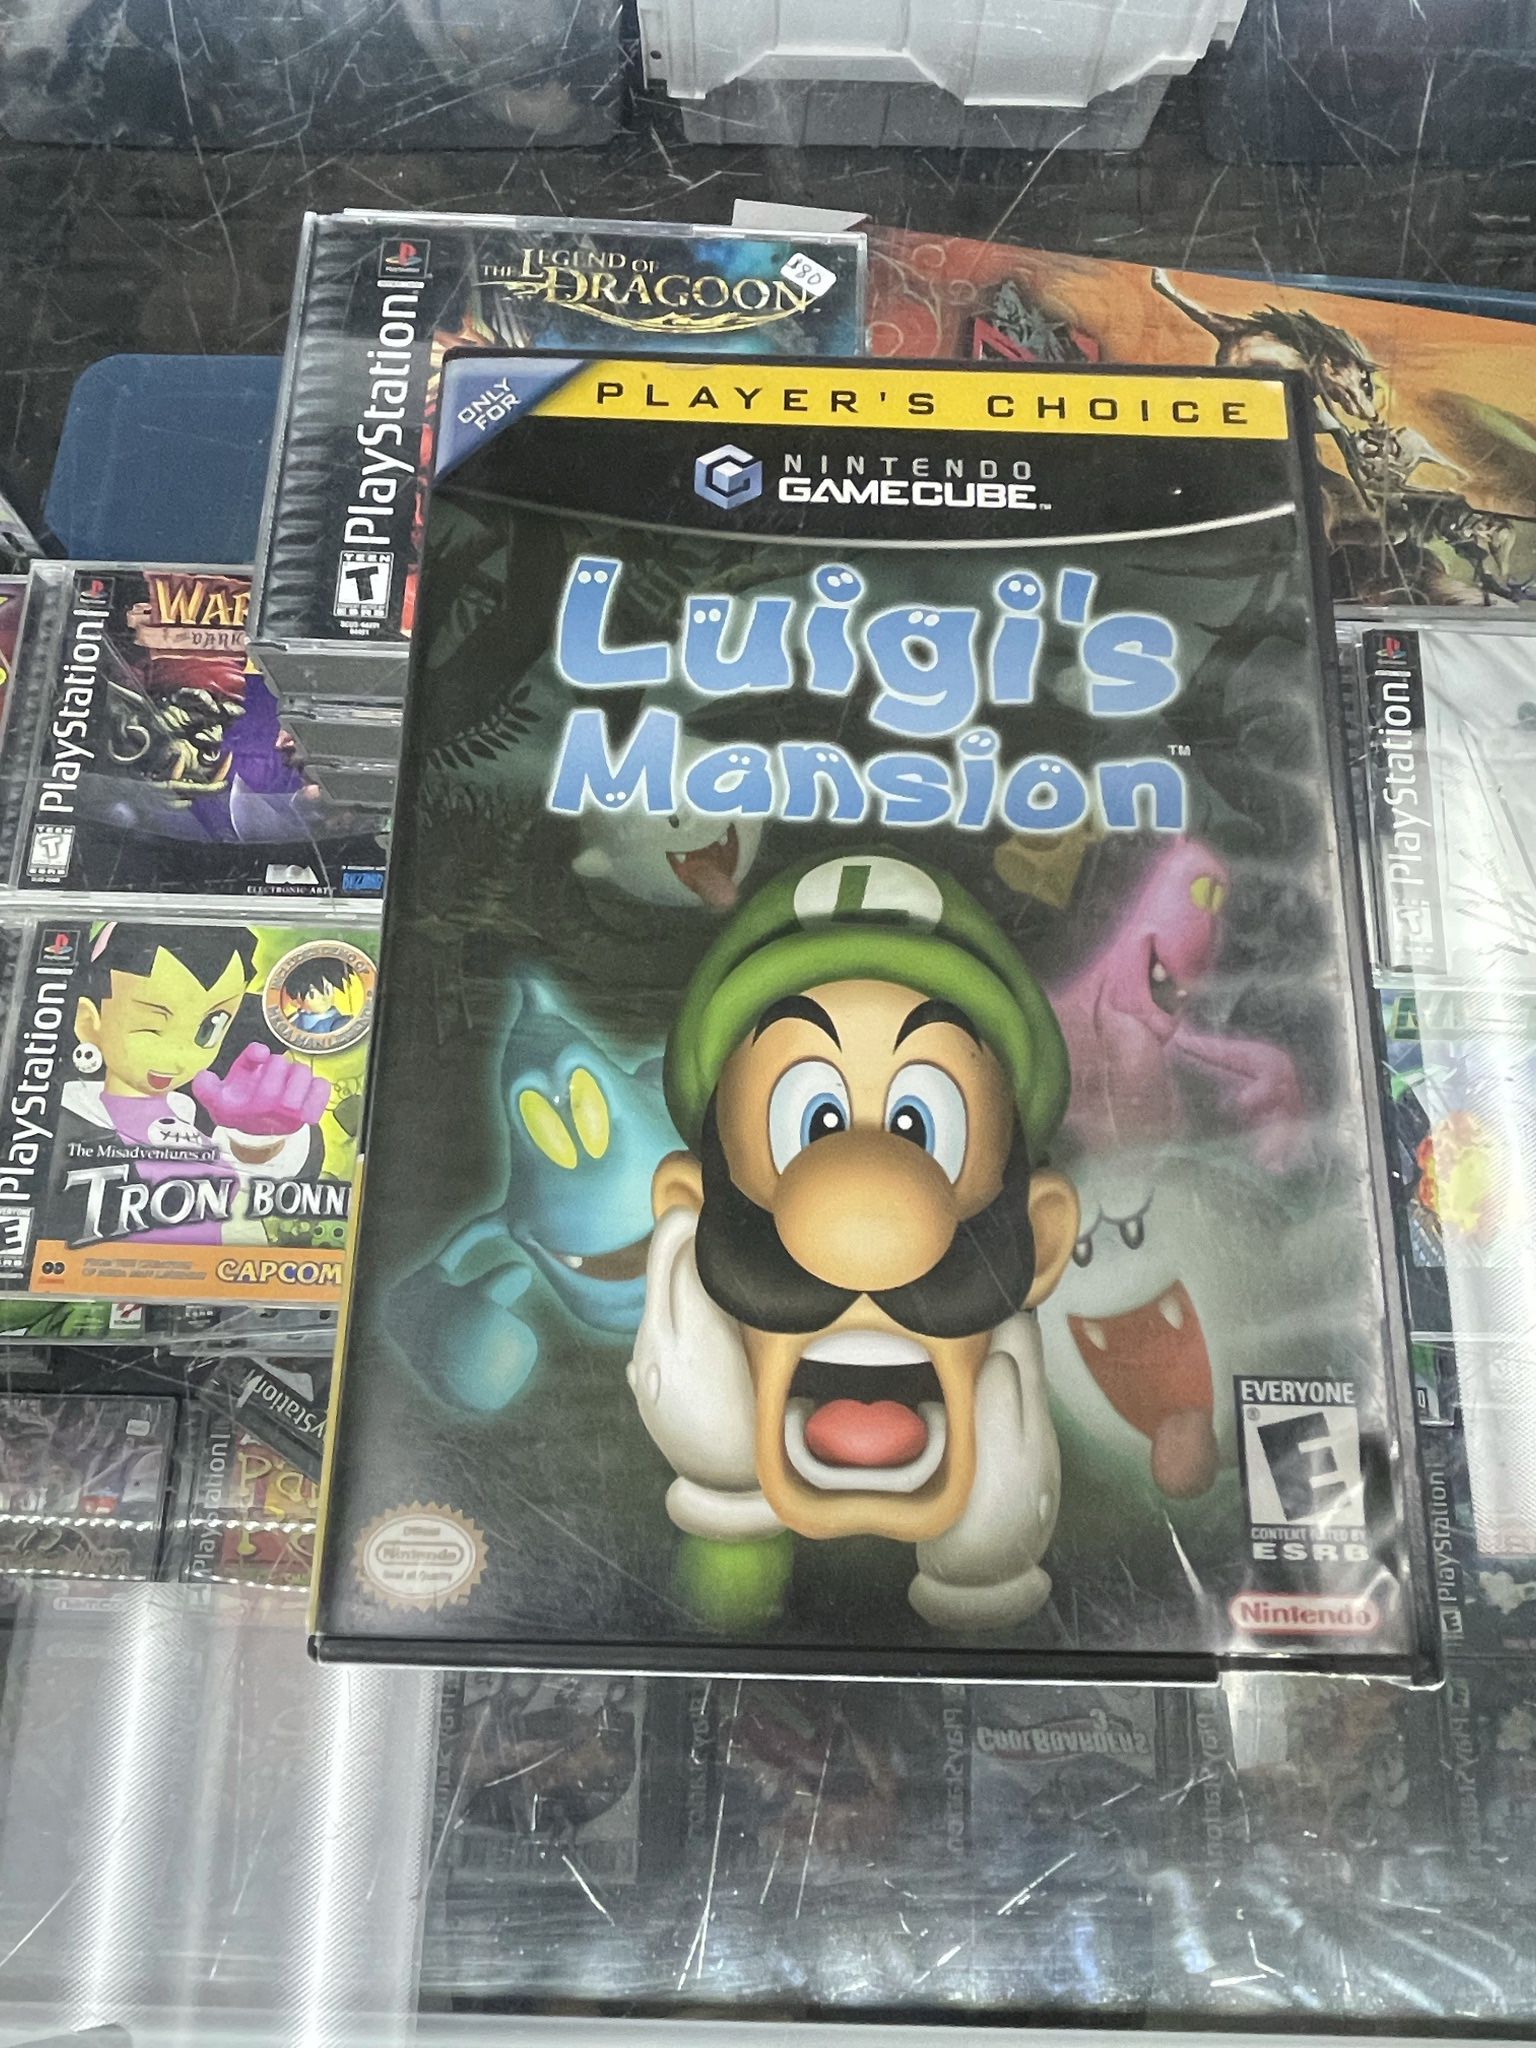 Luigi’s Mansion $80 Gamehogs 11am-7pm